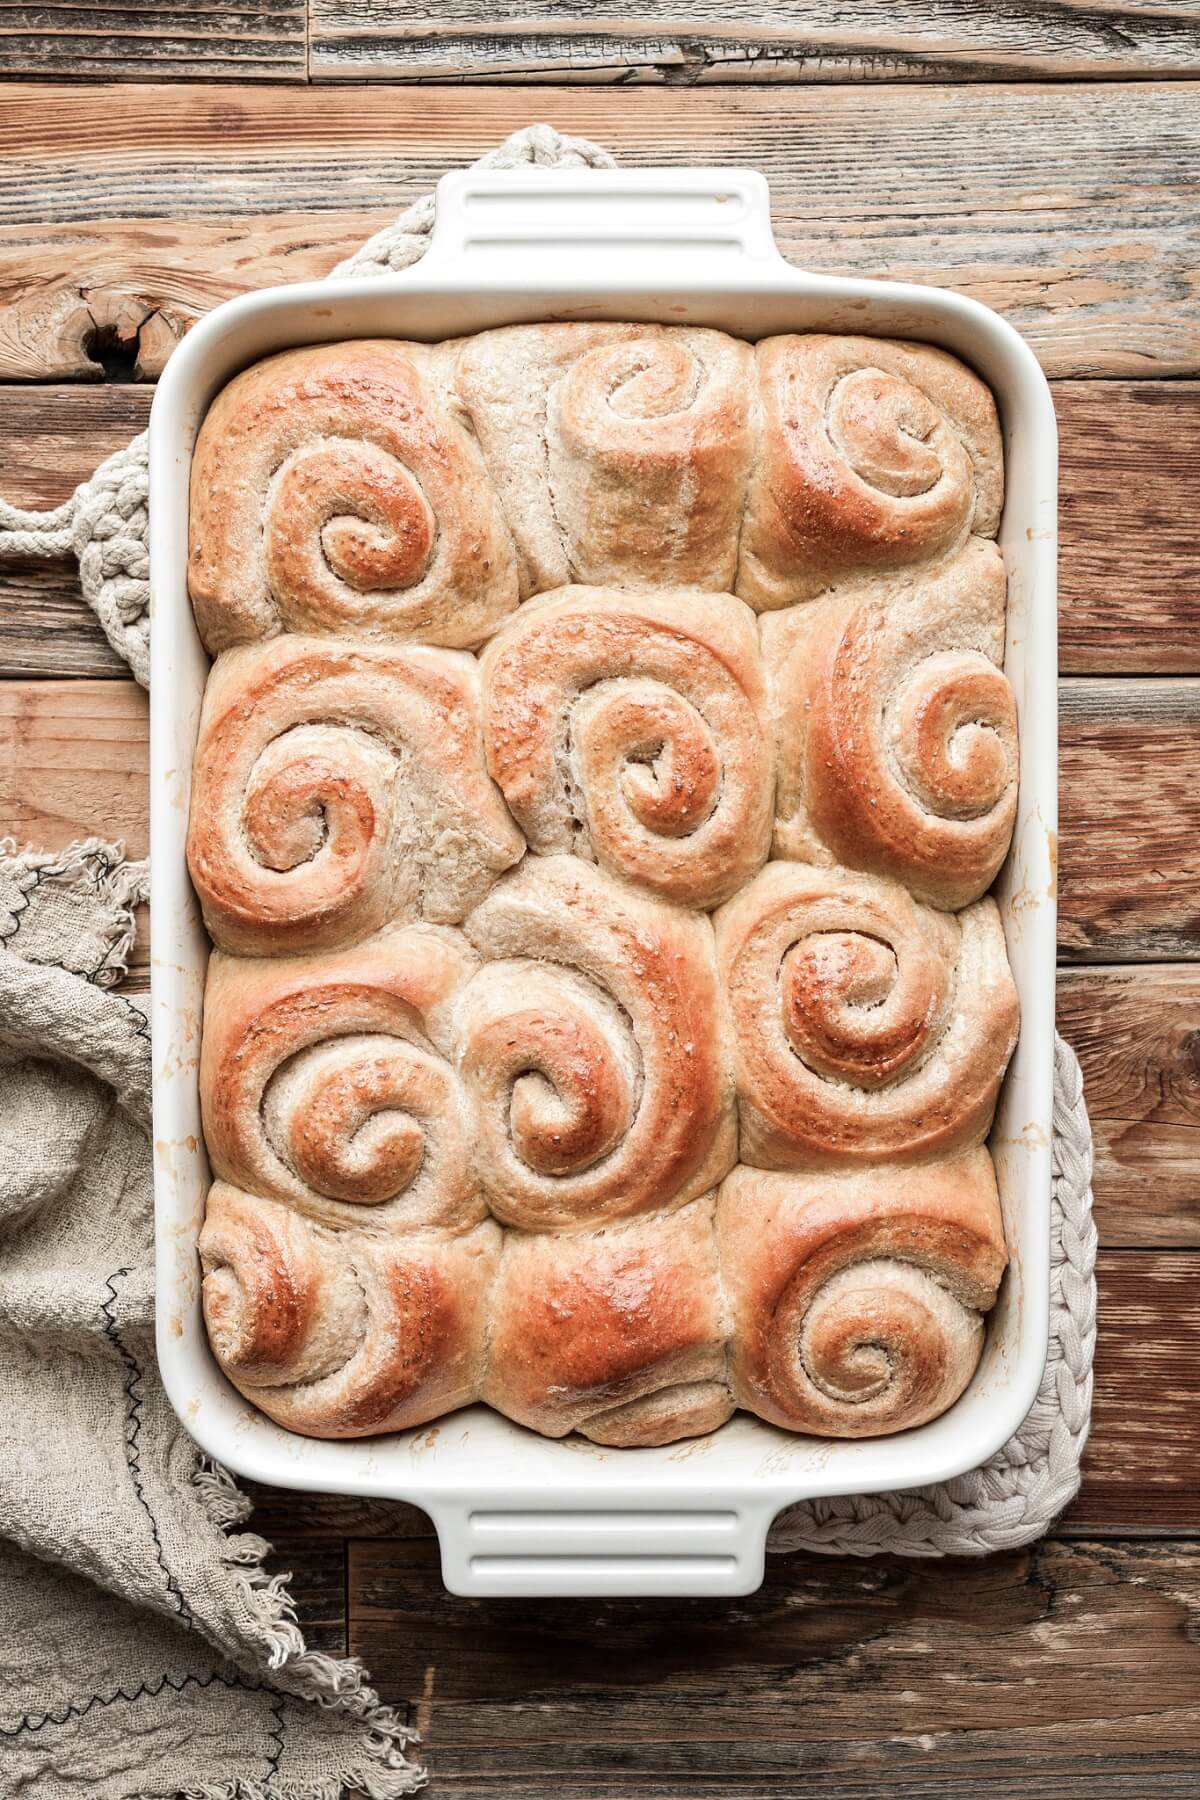 Just baked cinnamon honey dinner rolls shaped in spirals.